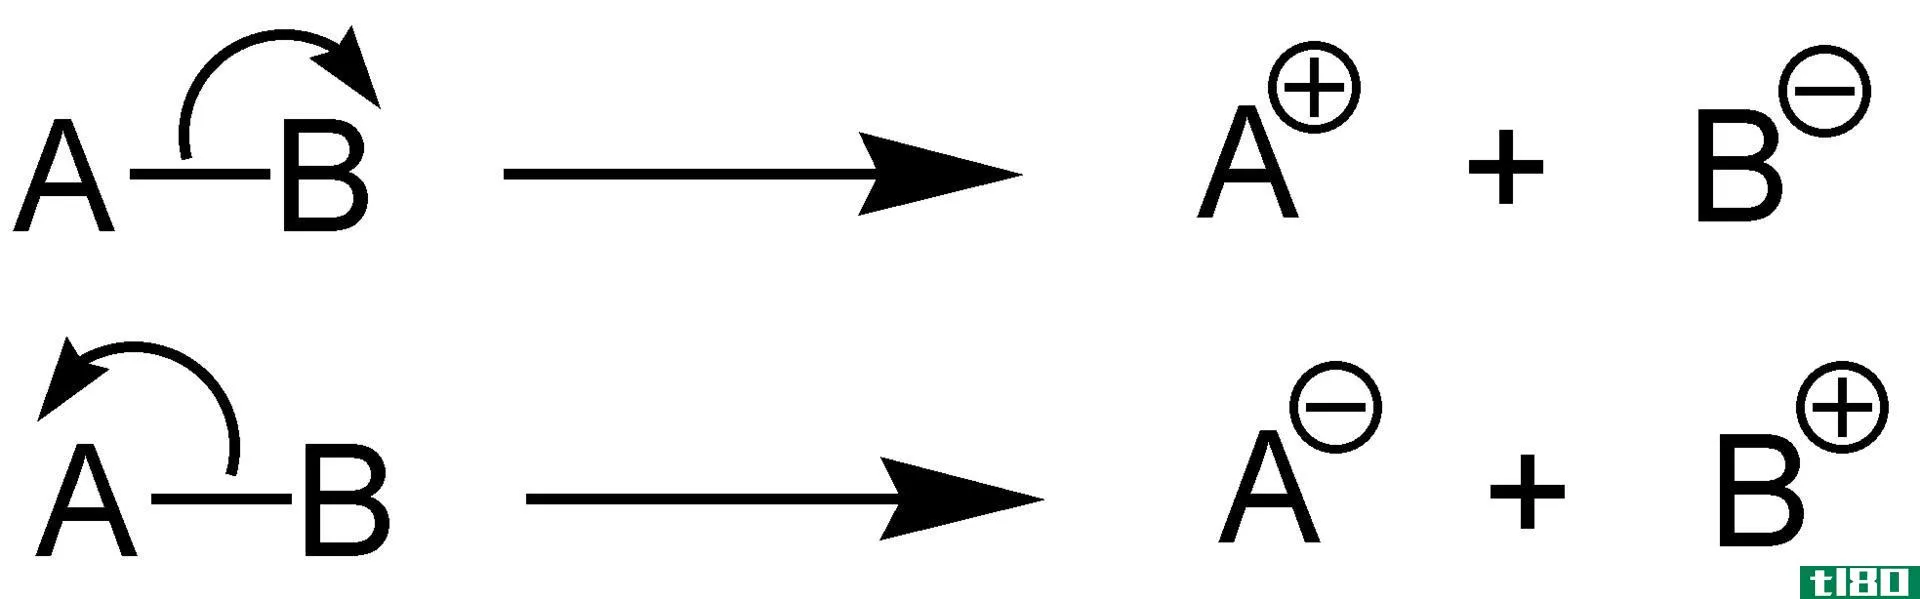 原子化焓(enthalpy of atomisation)和键裂解(bond dissociation)的区别